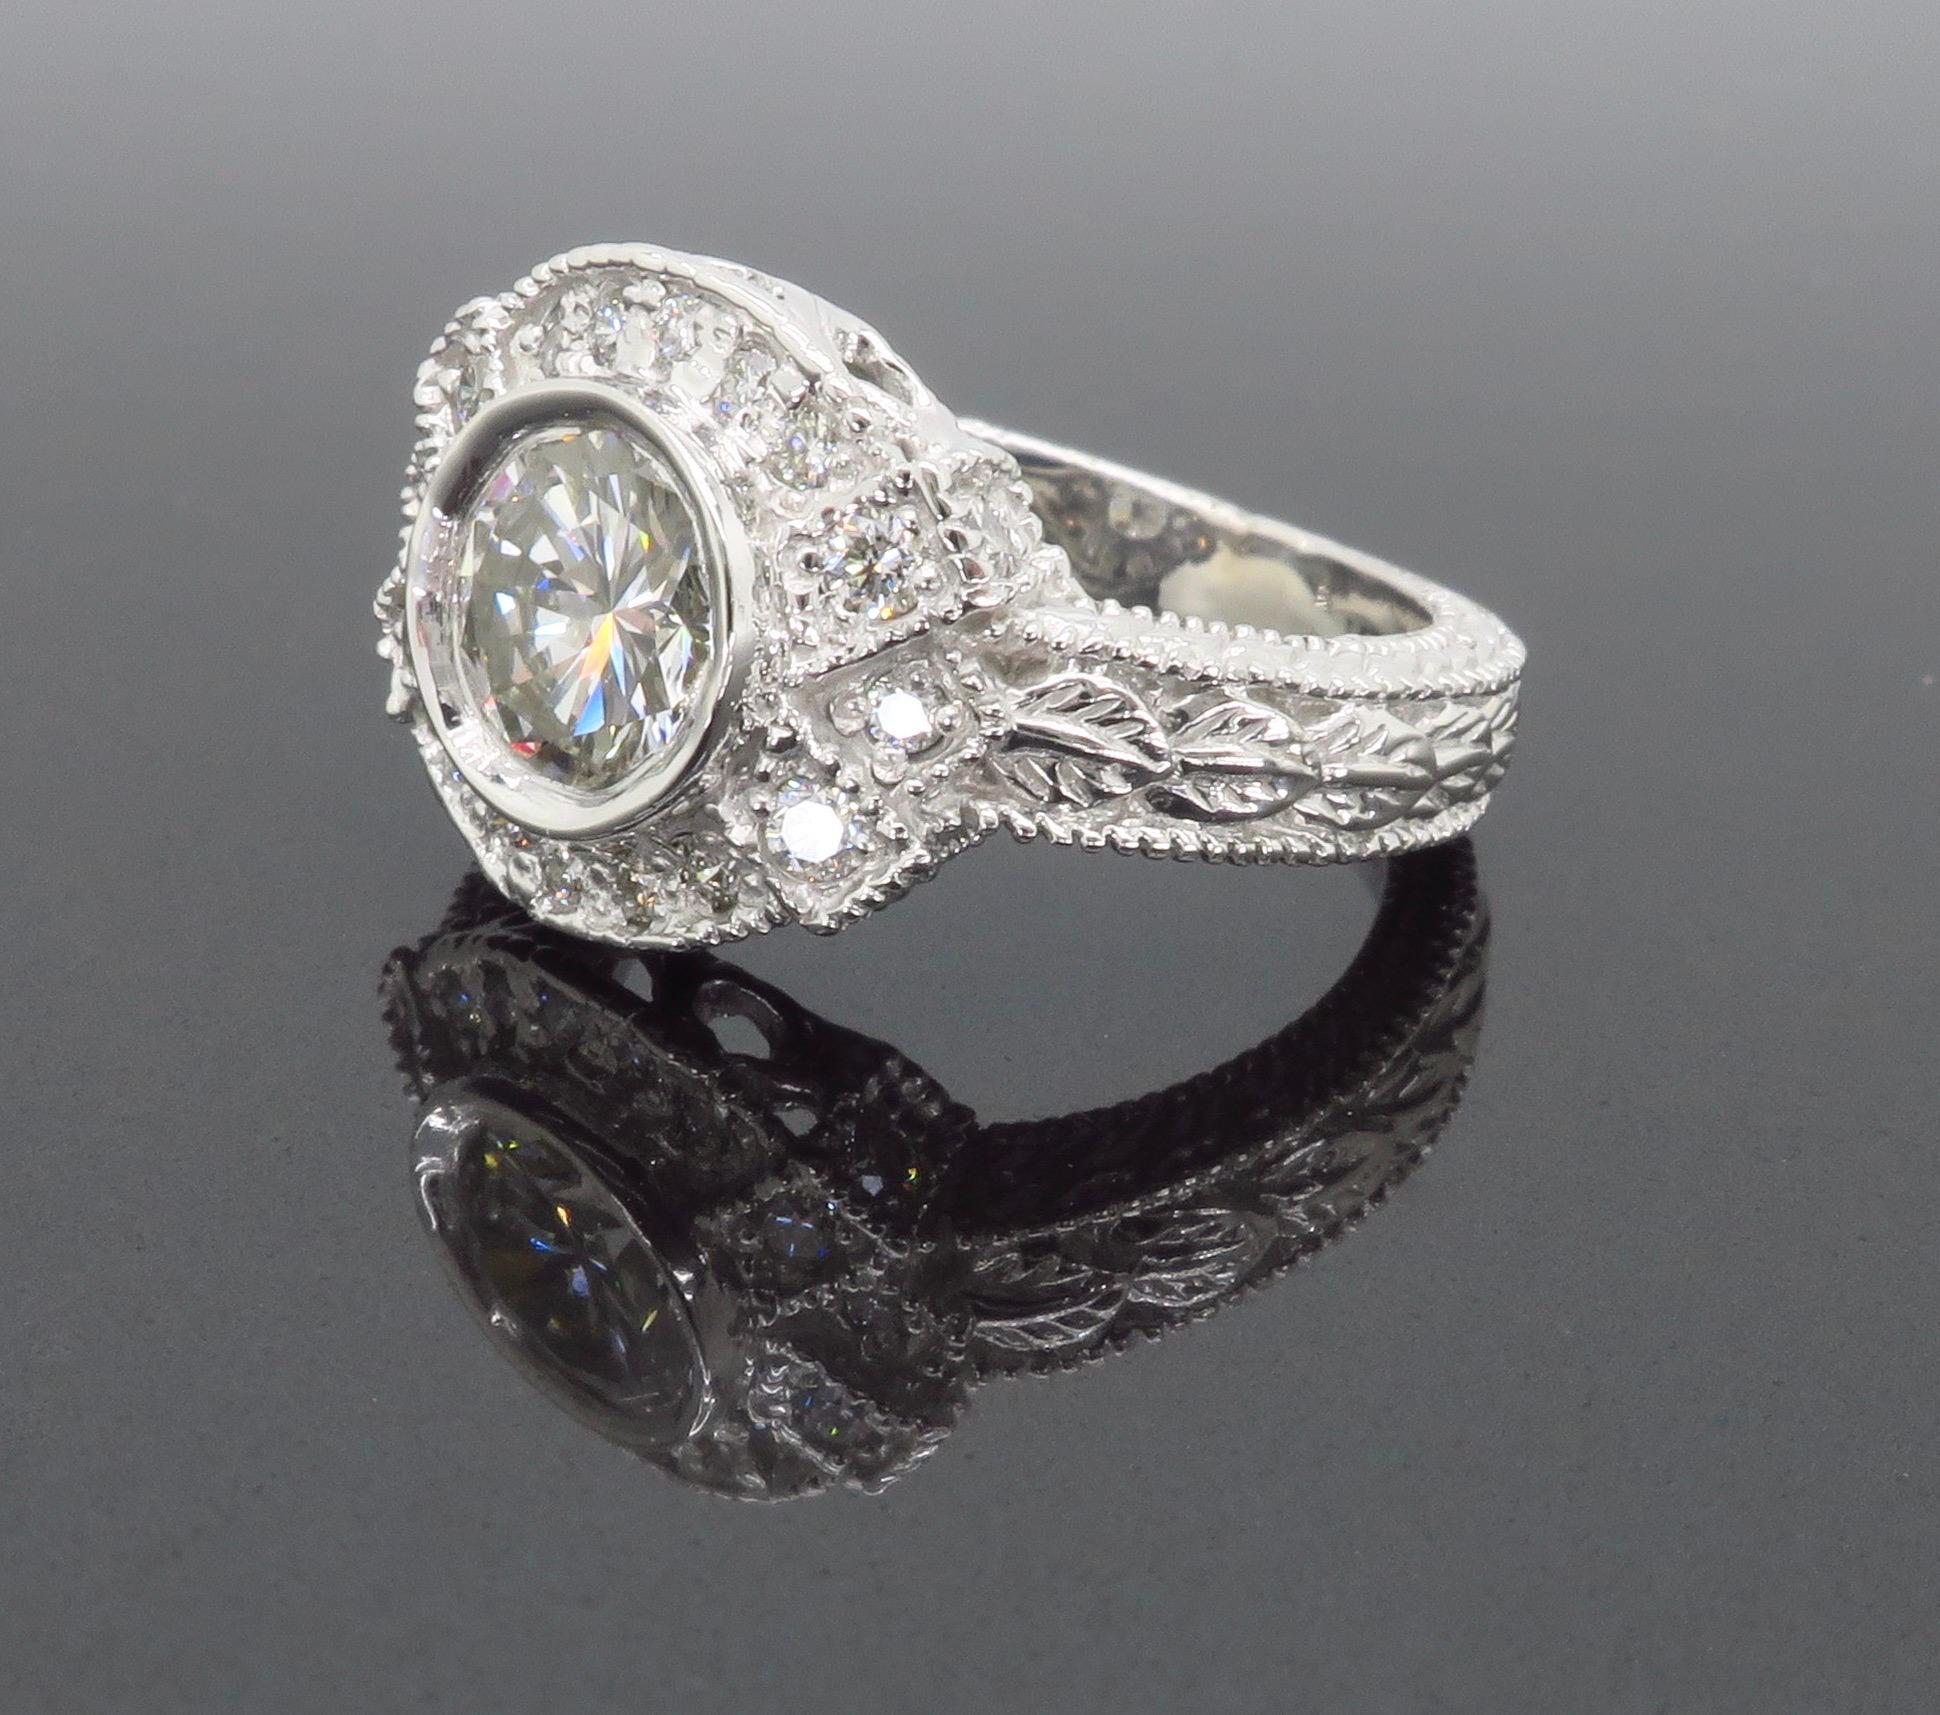 Vintage Inspired 1.27 Carat Diamond Ring Made in 14 Karat White Gold For Sale 3